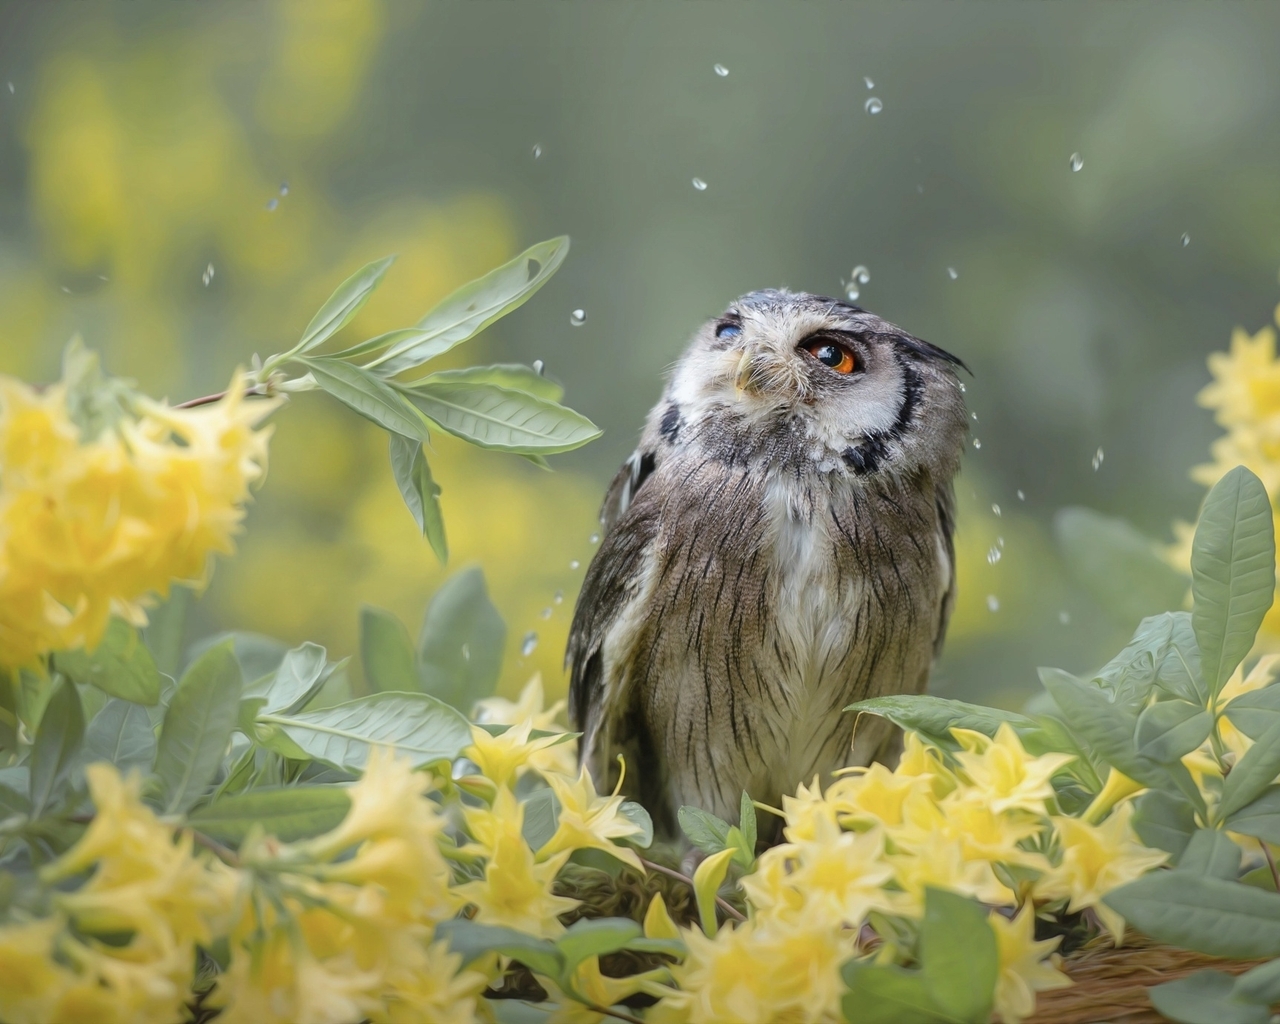 Image: Owl, bird, leaves, drops, looks, flowers, yellow, blur